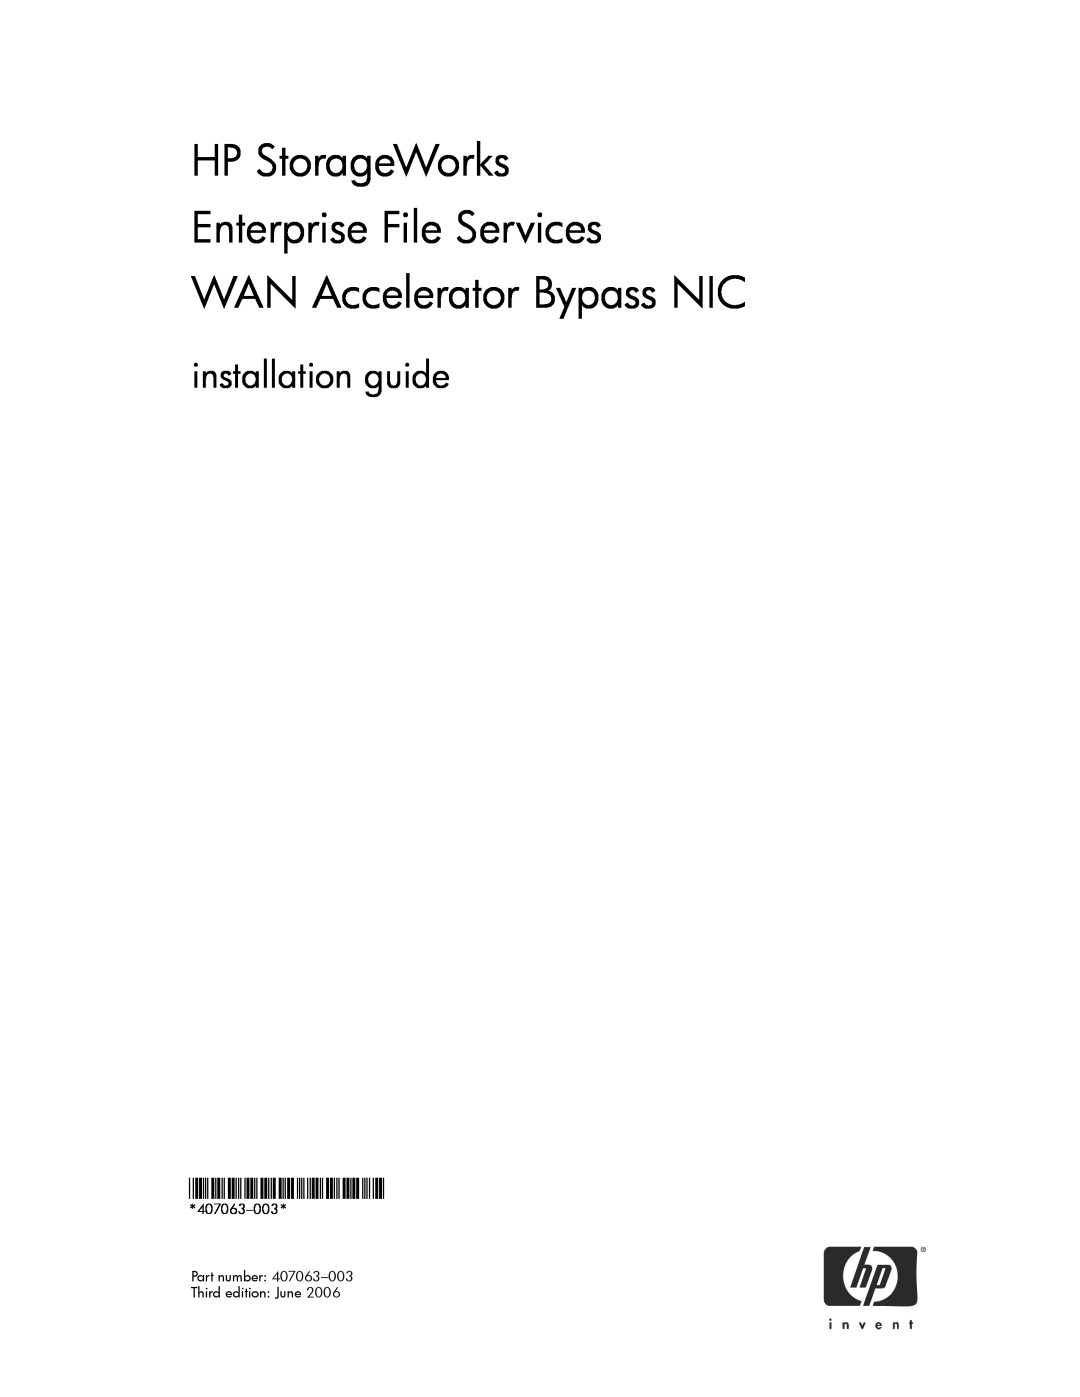 HP Enterprise File Services WAN Accelerator manual 393871-002, Dear Valued Customer 